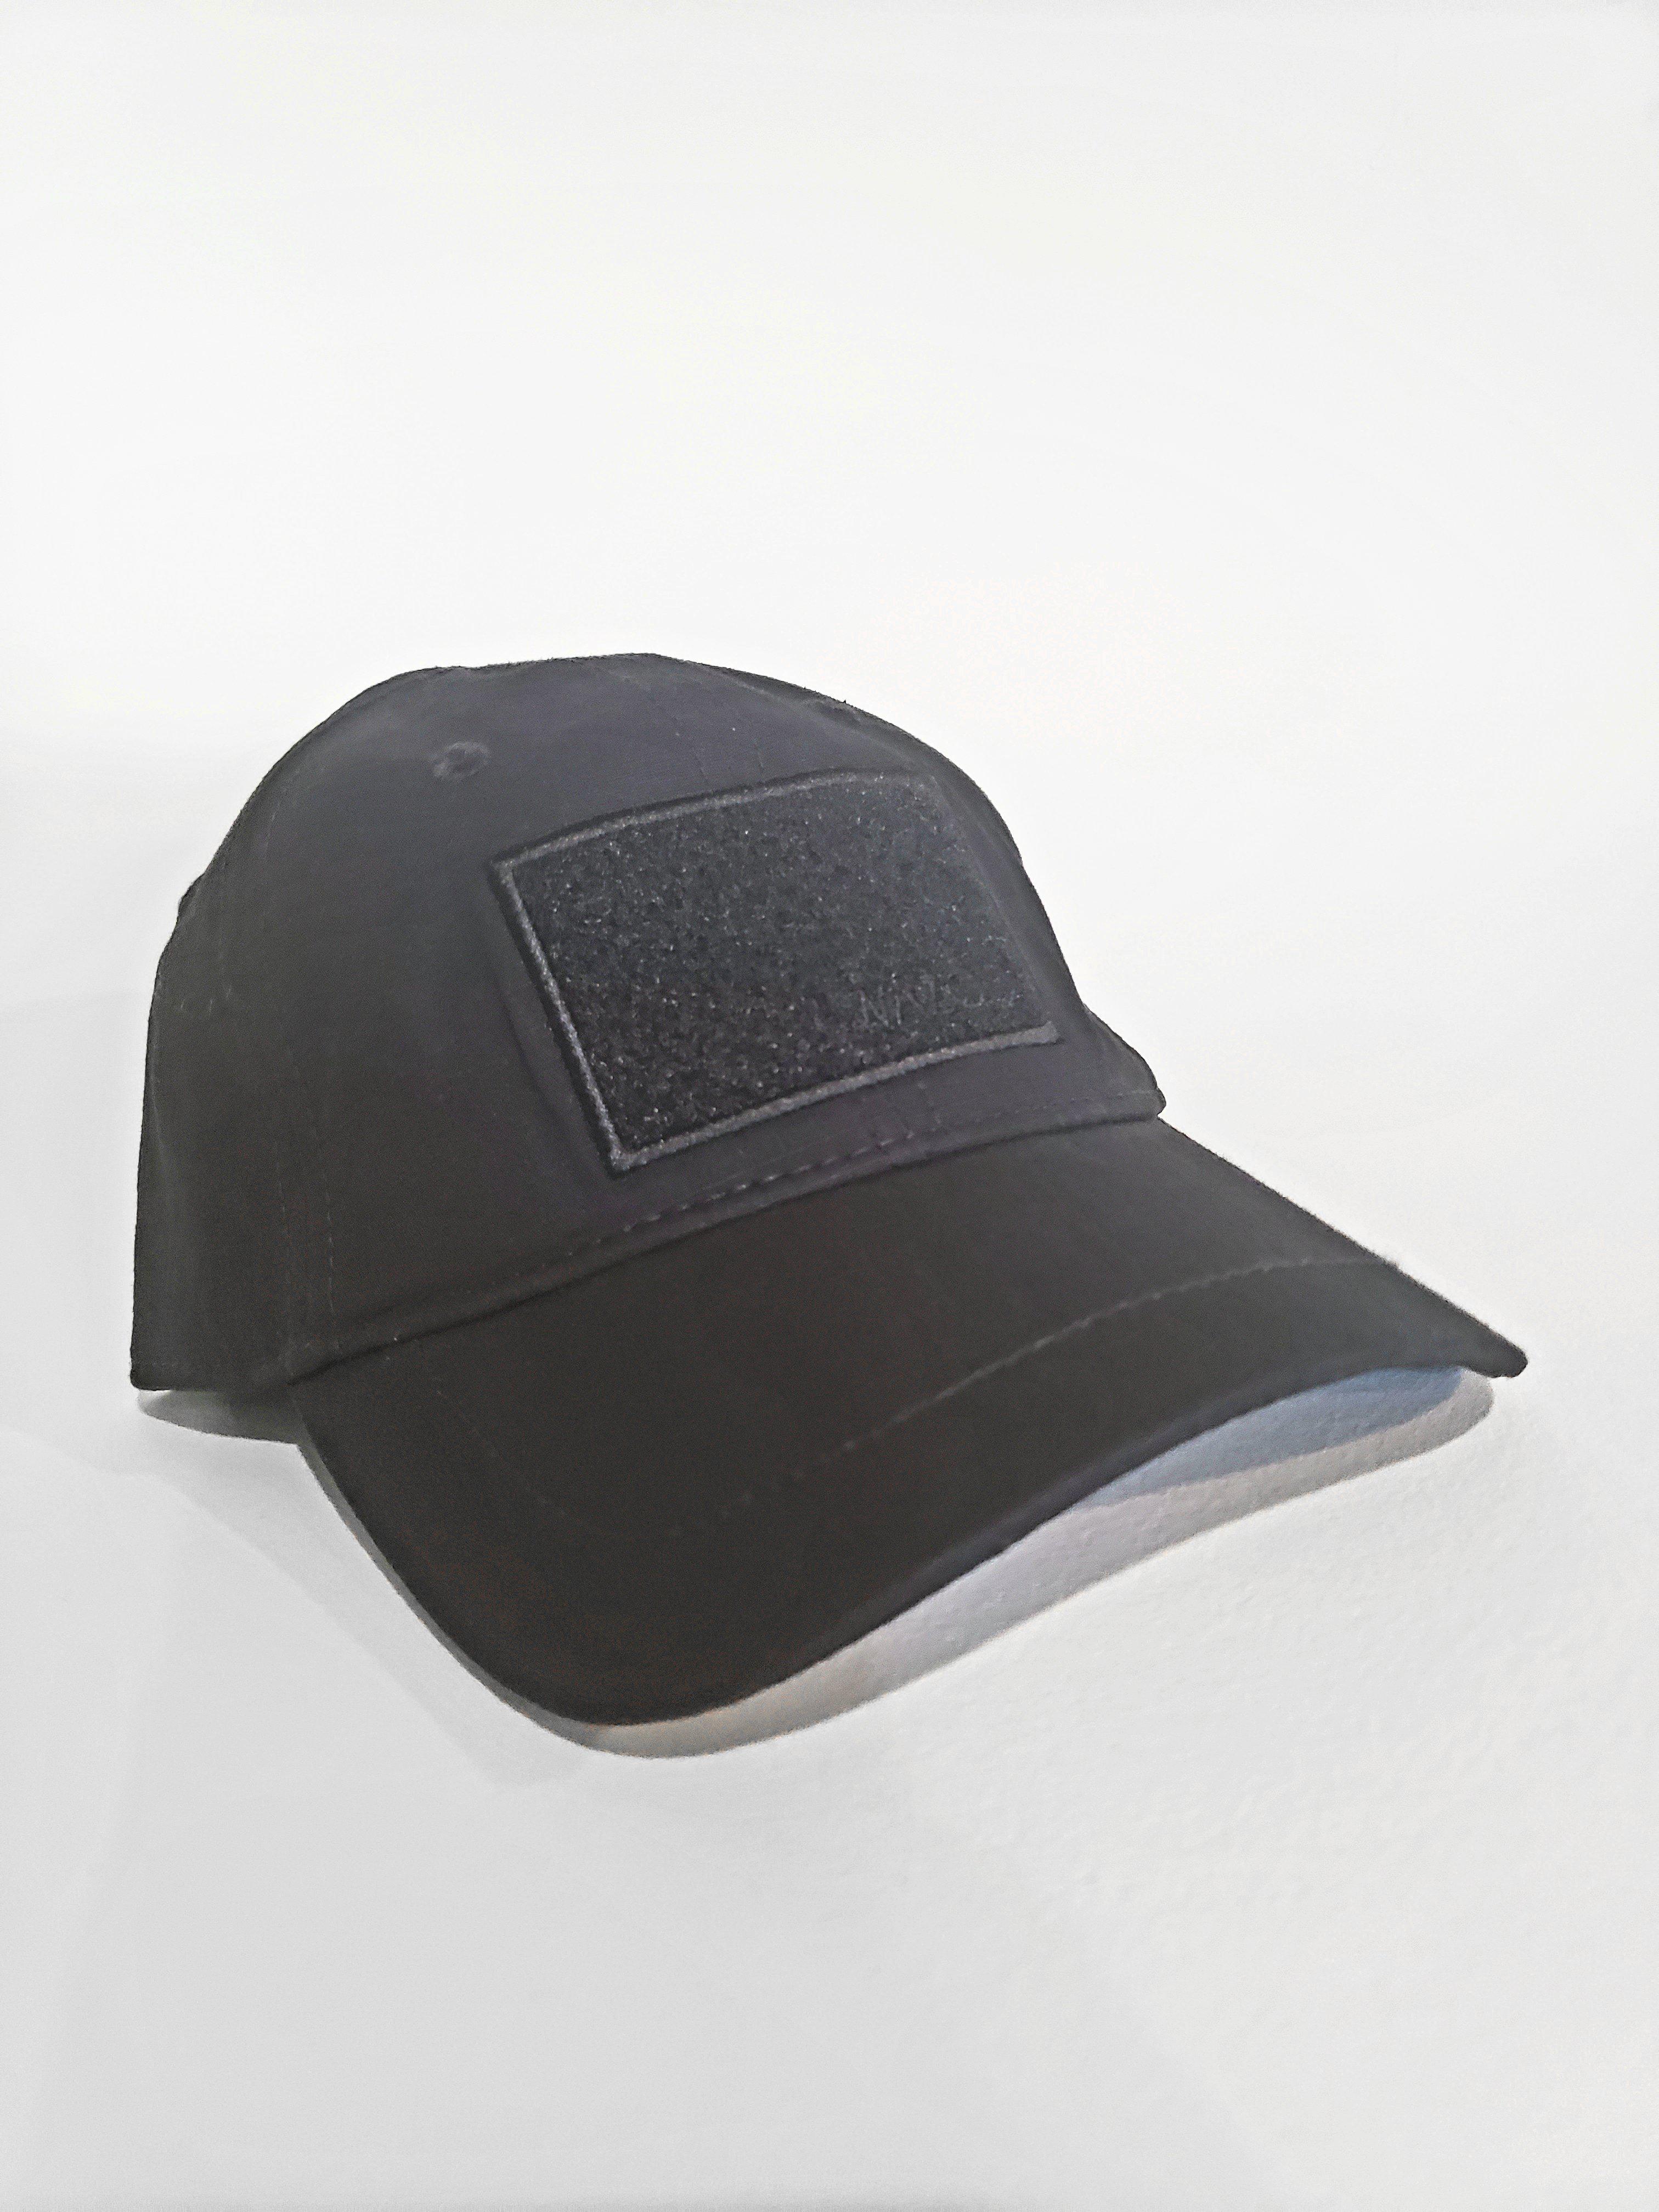 Cache Cap | Hat with Hidden Pockets | Wazoo Gear Tan